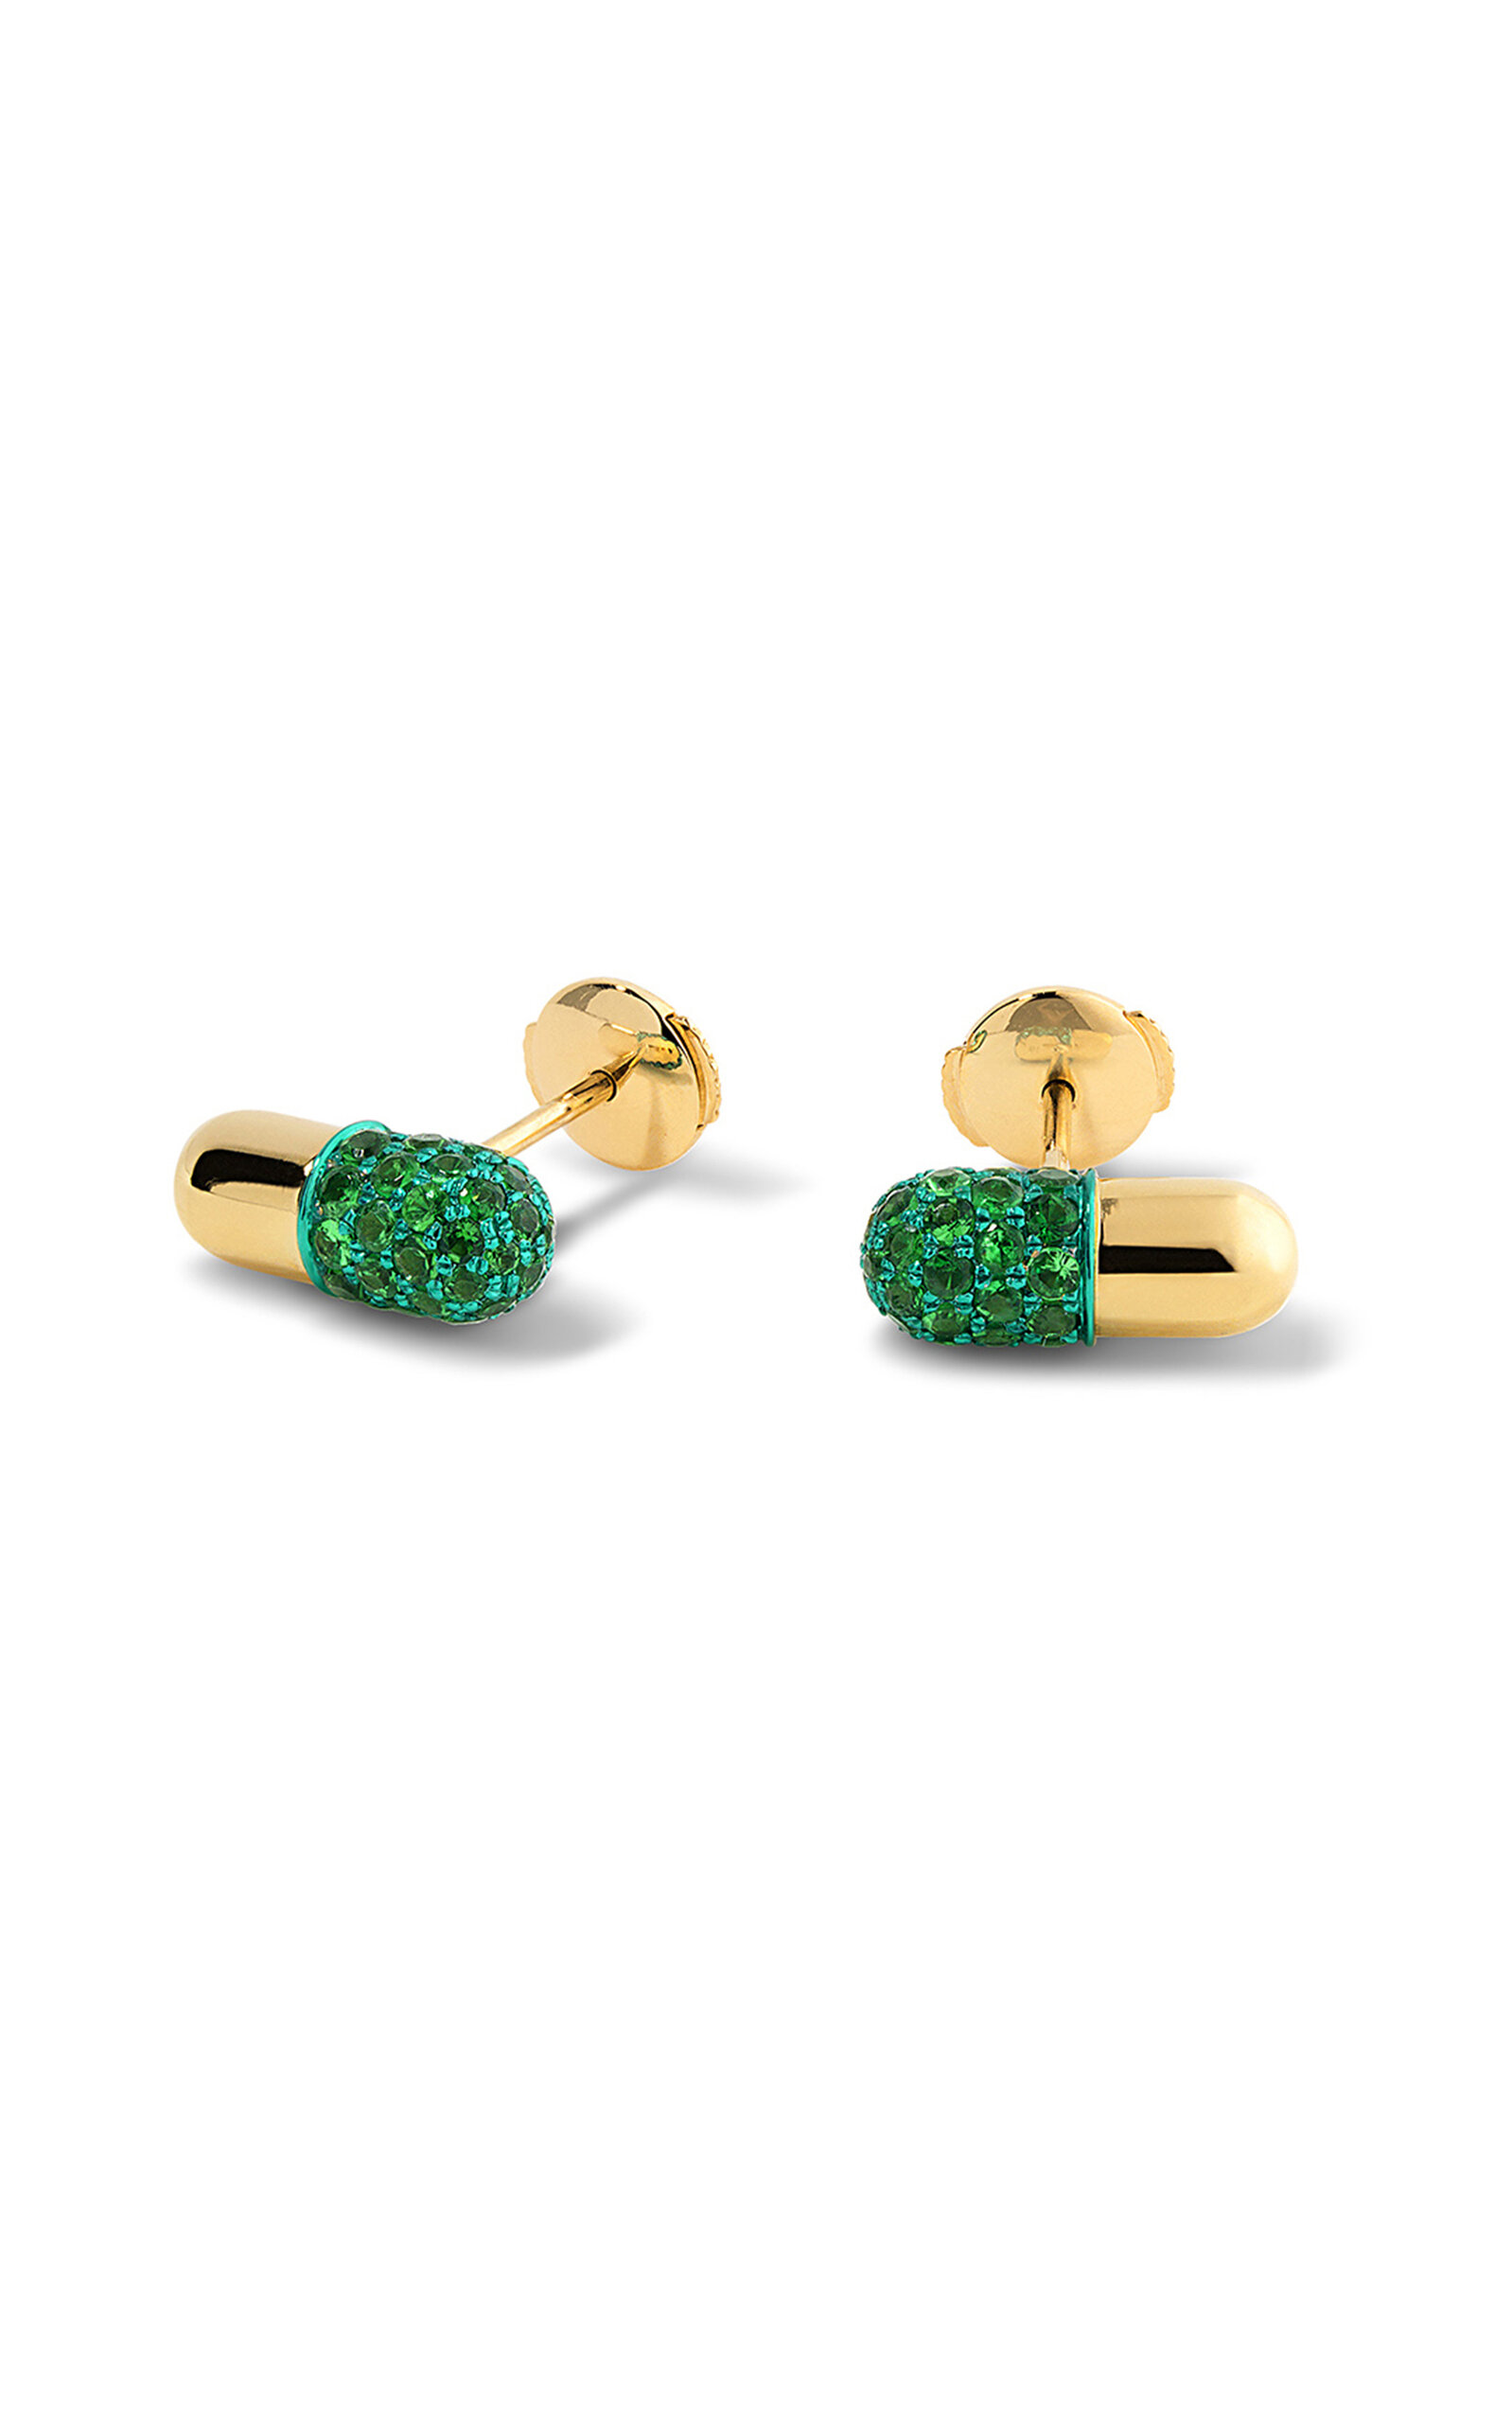 18k Yellow Gold Pill Stud Earrings with Green Tsavorite Garnets